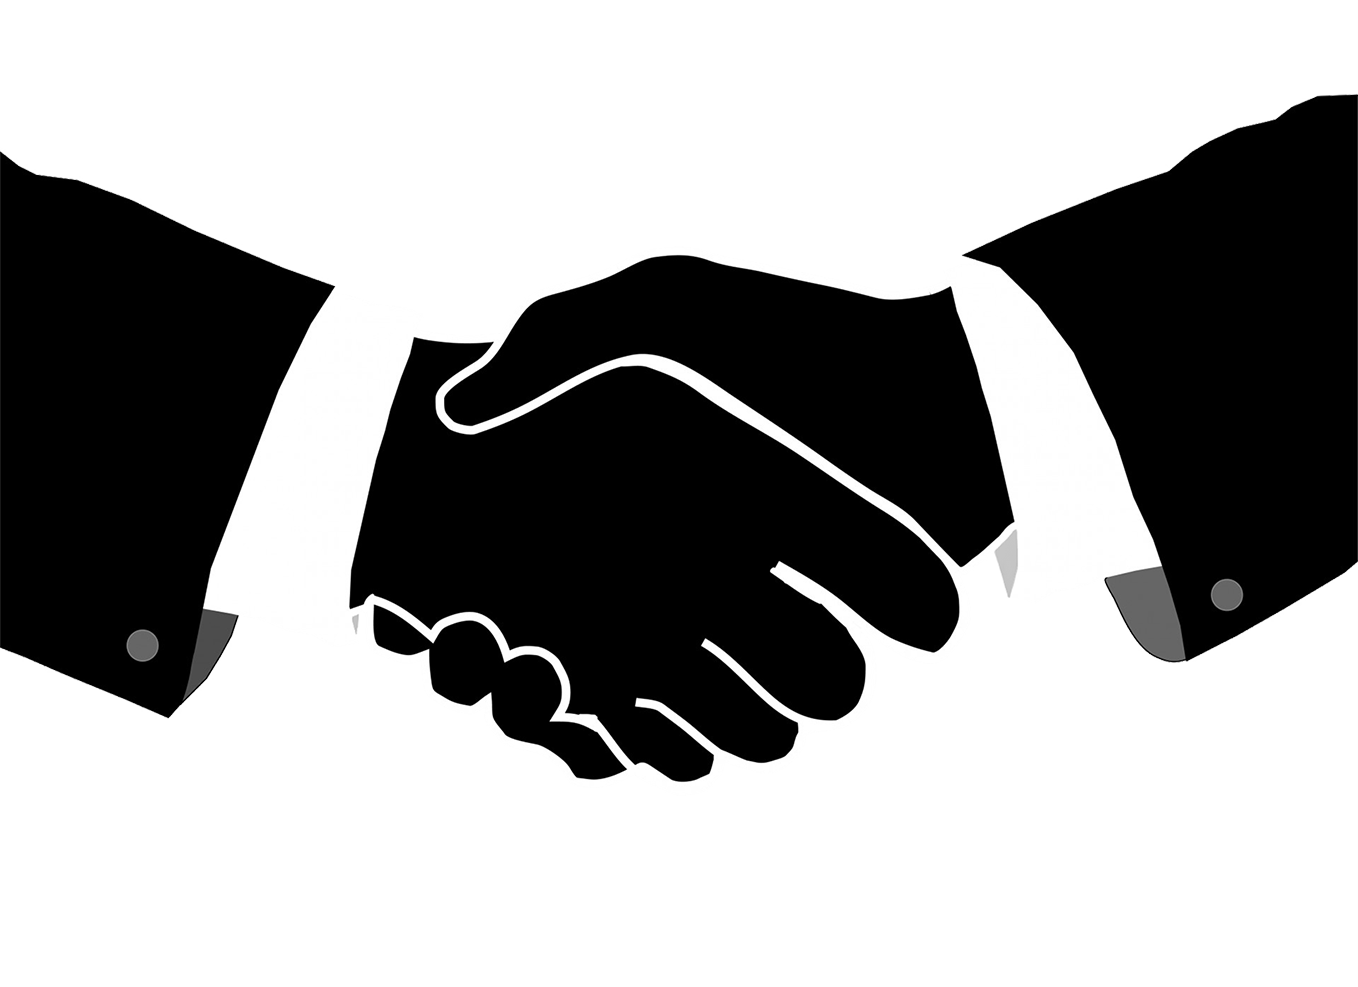 Handshake Handshake png download - 1000*750 - Free Transparent Handshake  png Download. - CleanPNG / KissPNG